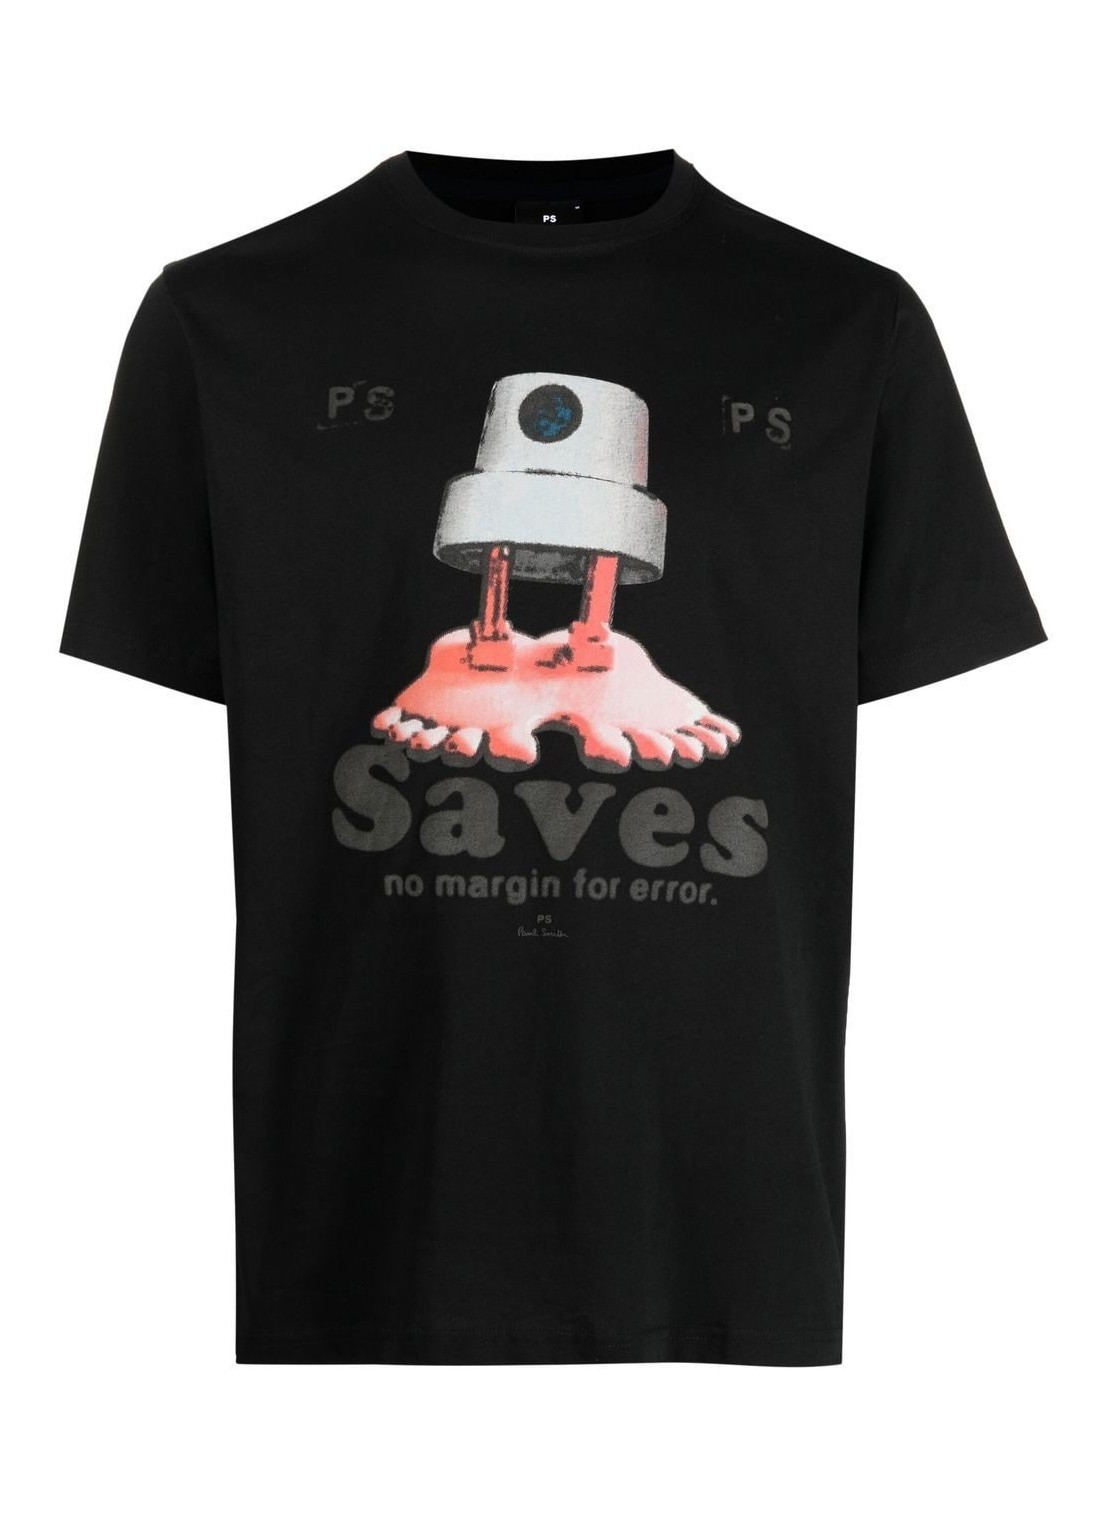 Camiseta ps t-shirt man mens reg fit t-shirt saves m2r011rkp3802 79 talla S
 